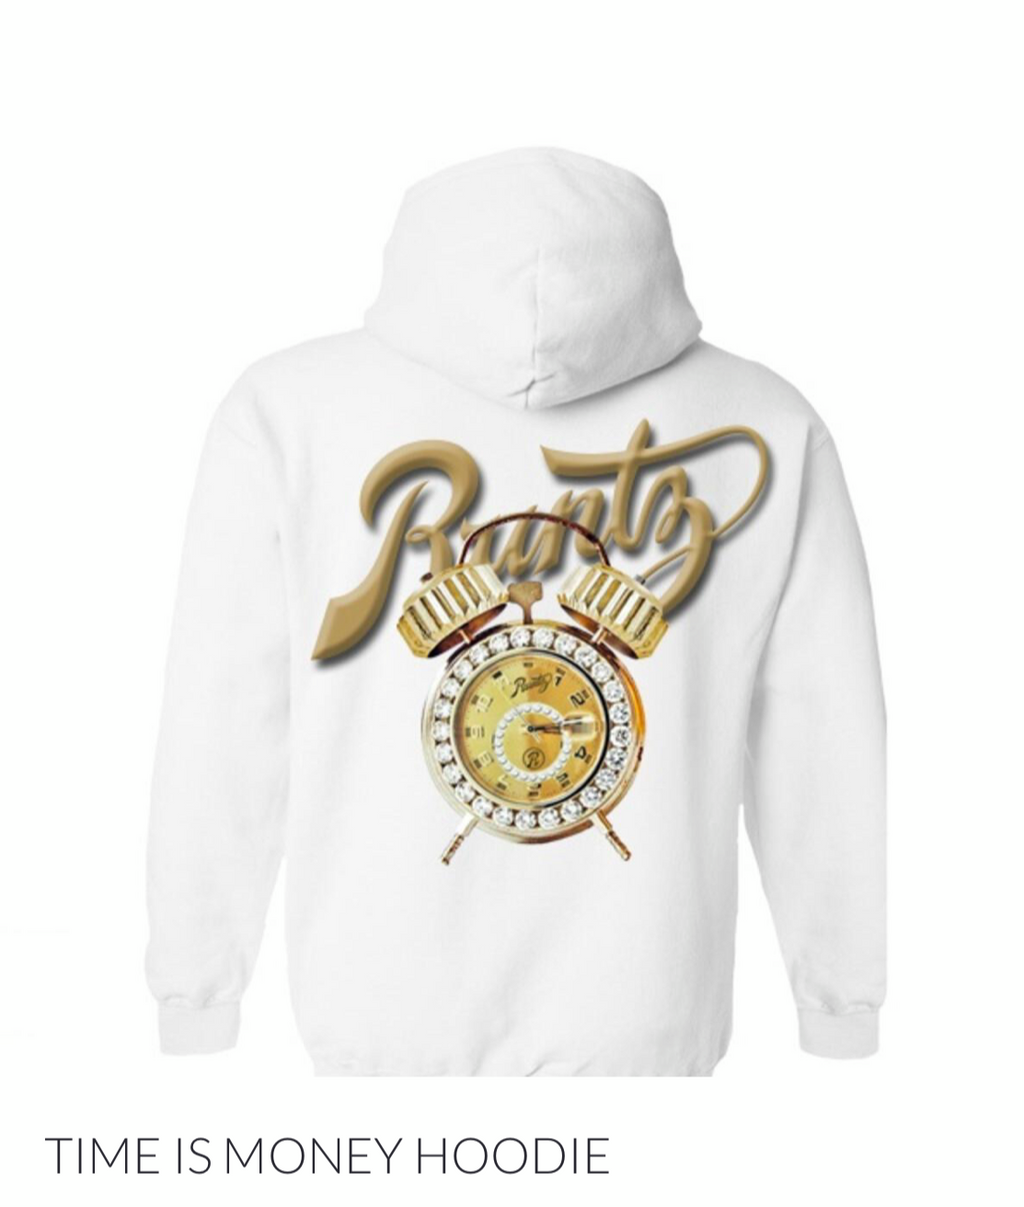 Men’s Runtz Brand Off White Gold Detail Hoodie Sweatshirt